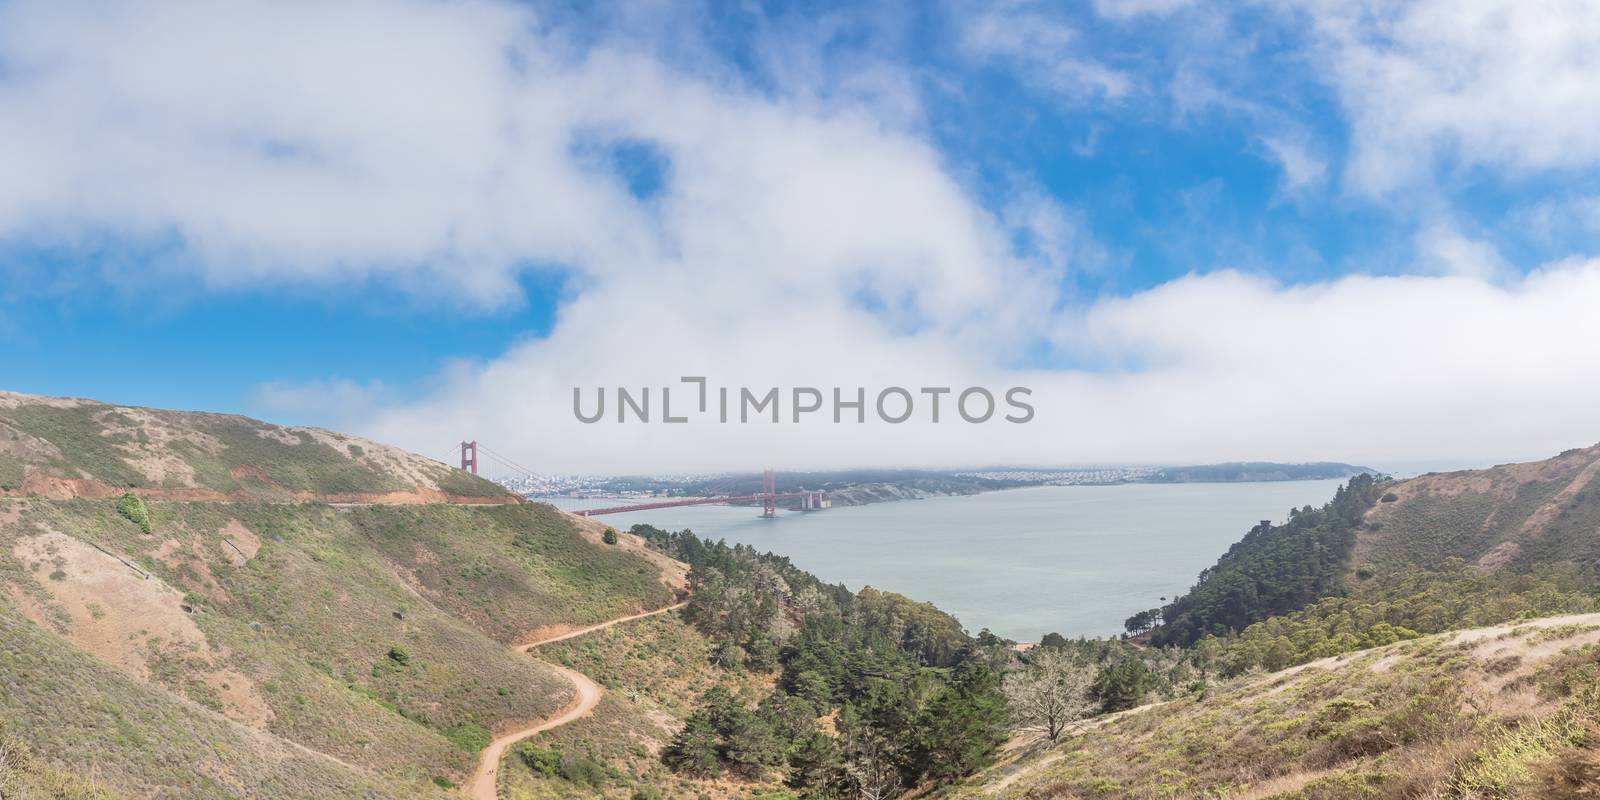 Panorama view of Golden Gate Bridge landmark from Observation Deck near Hawk Hill by trongnguyen